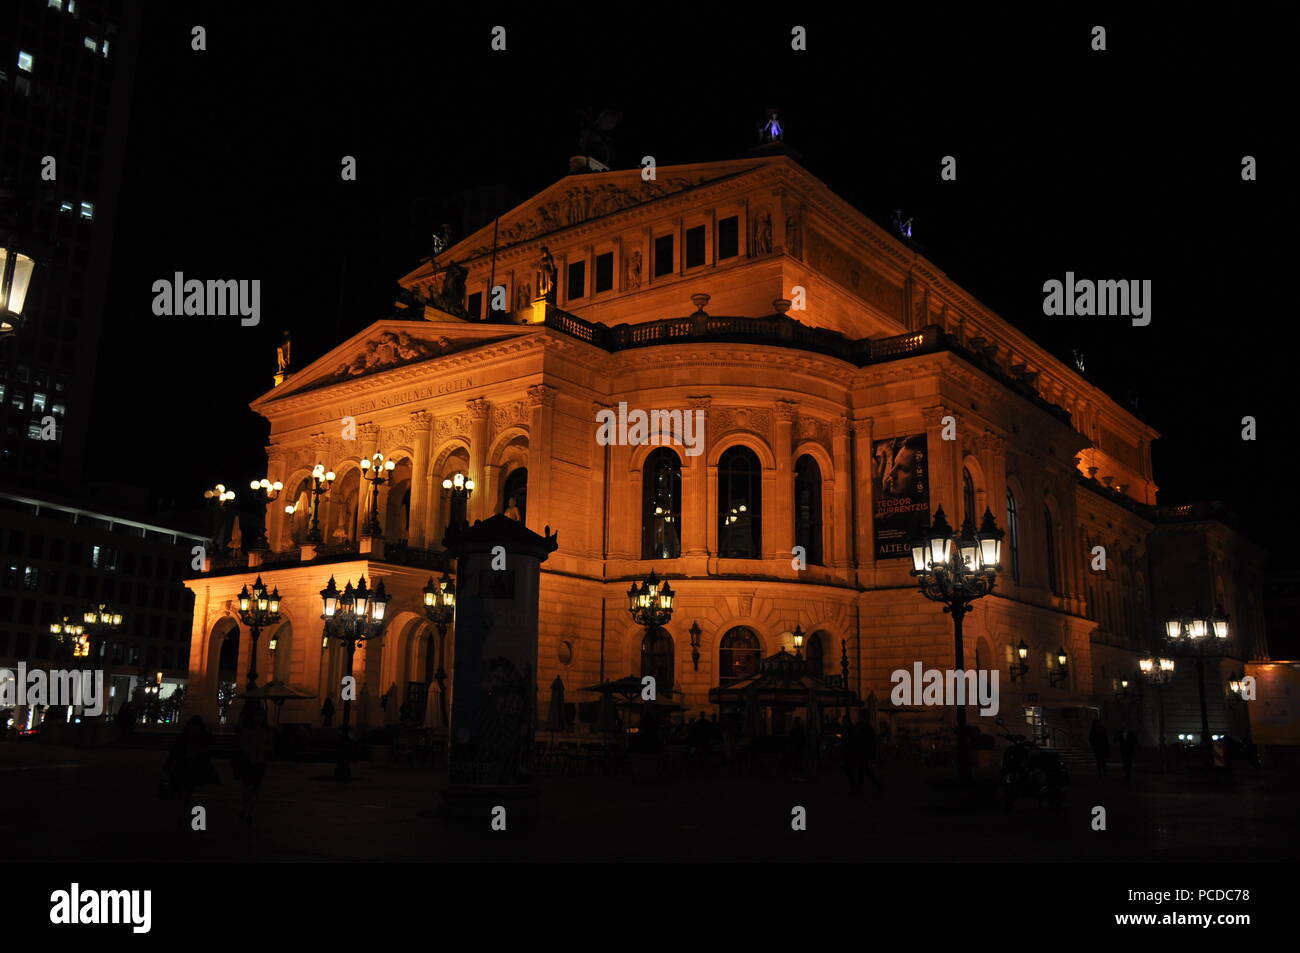 La antigua Ópera (Alte Oper) por noche, Frankfurt am Main, Alemania Foto de stock